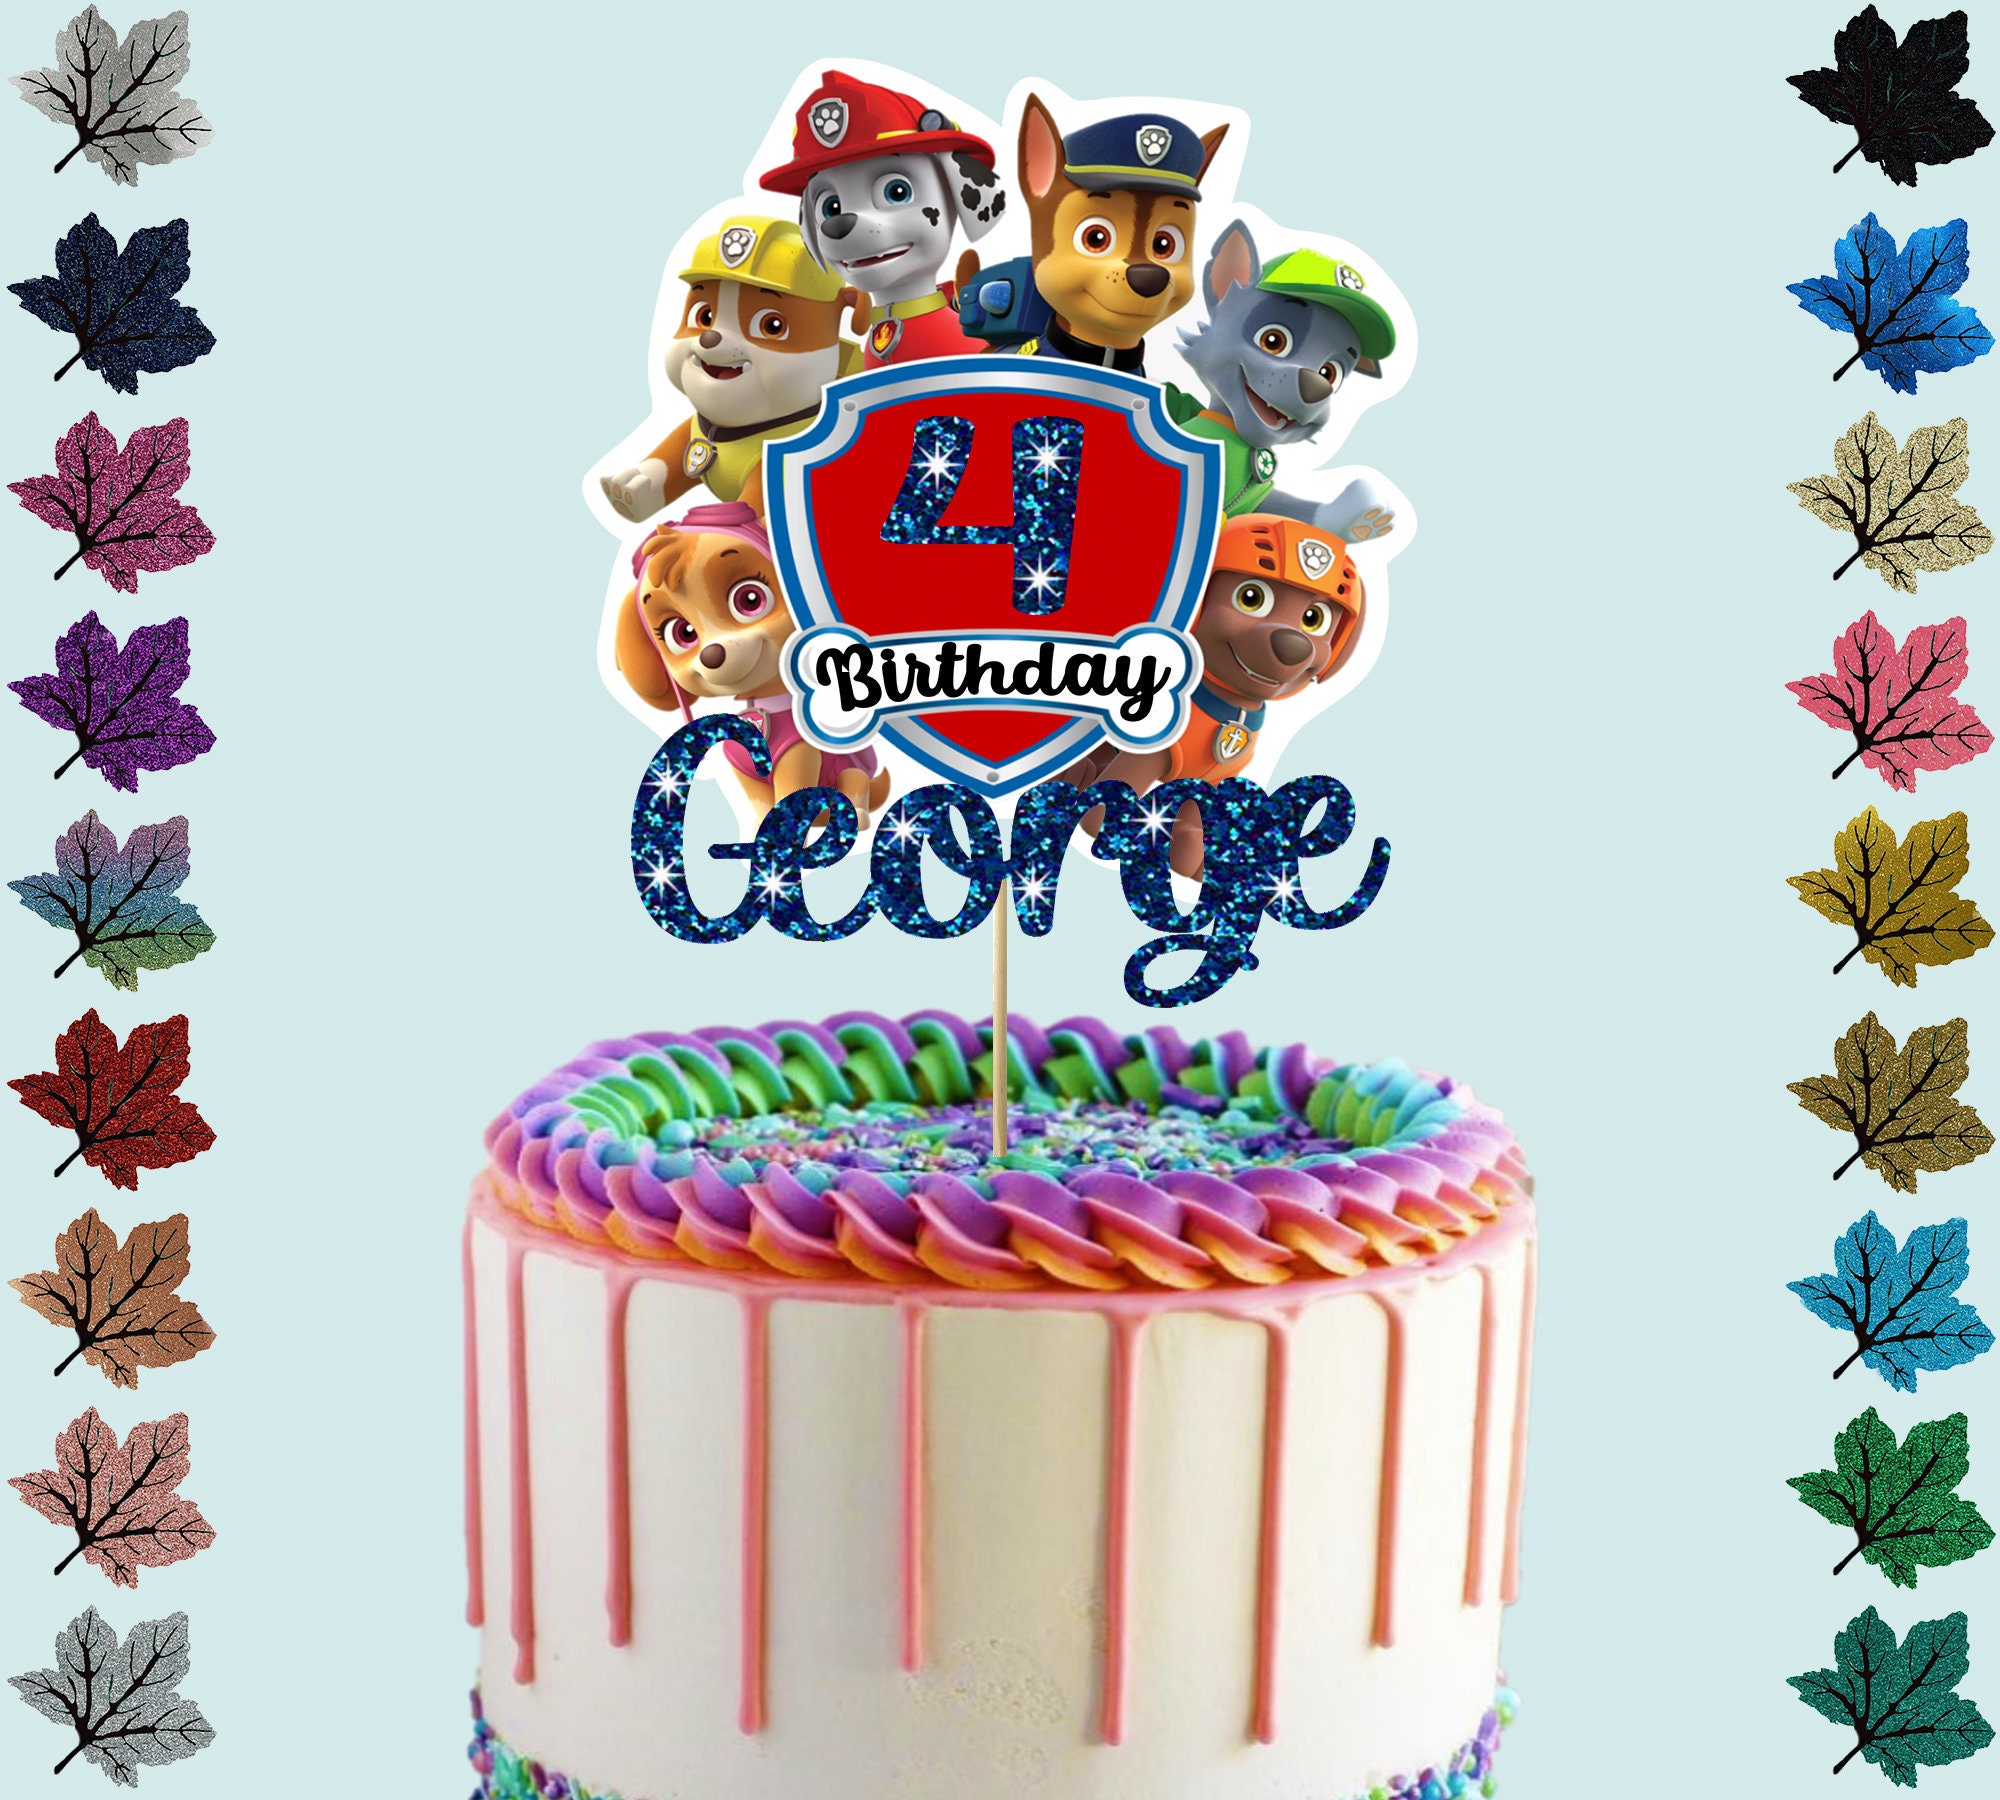 Pastel Rainbow Birthday Cake Topper SVG Graphic by planstocraft